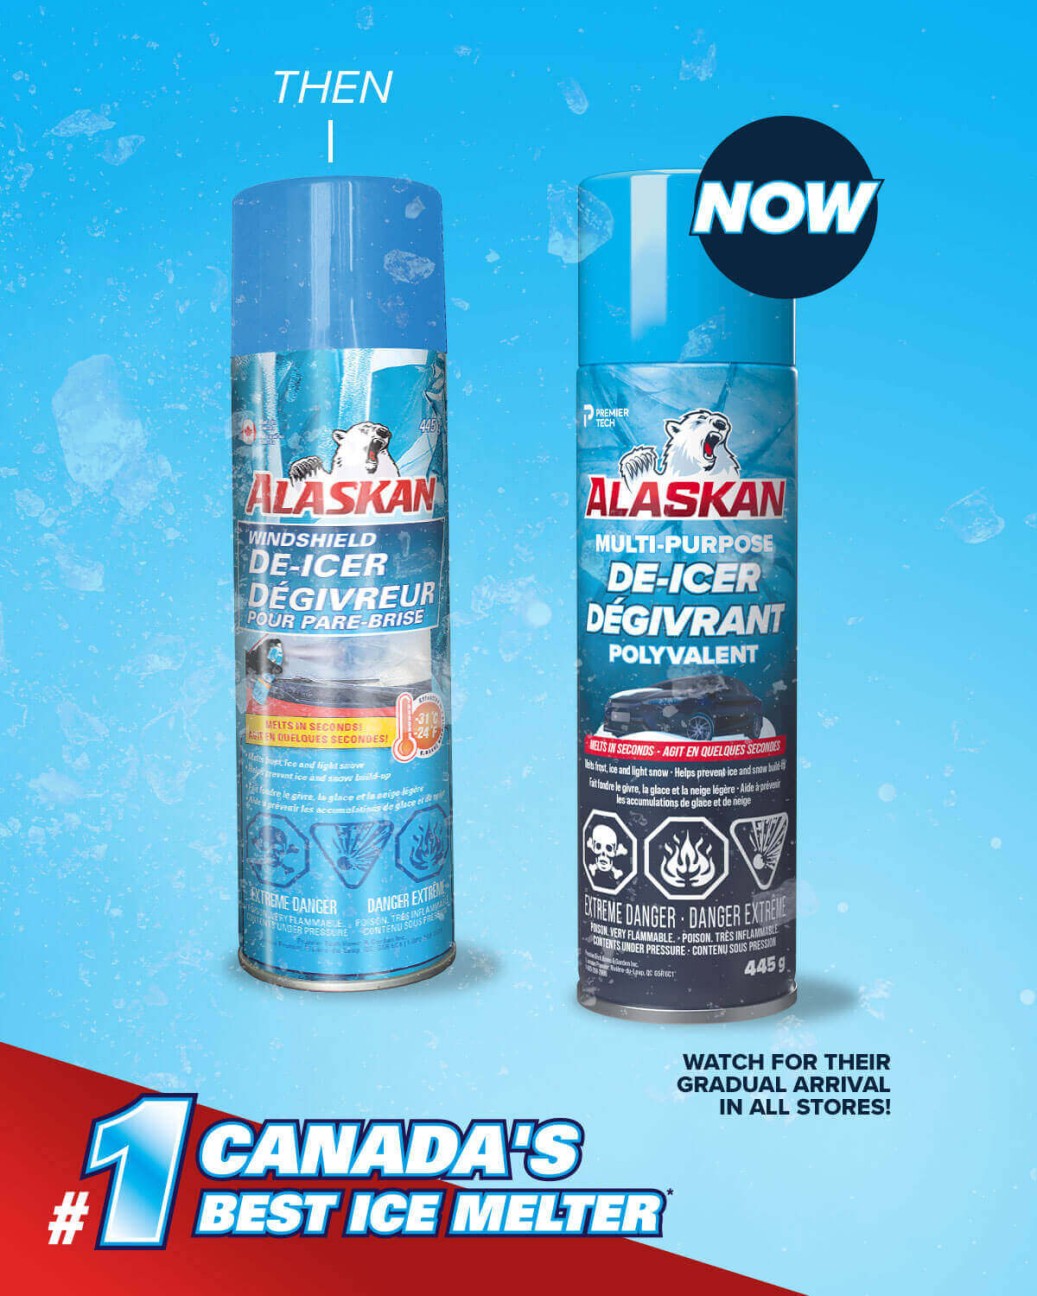 4x K2 K607 Alaska Dégiveur Spray Dégivrant Essuie-Glace Déglaçant Spray  700ml